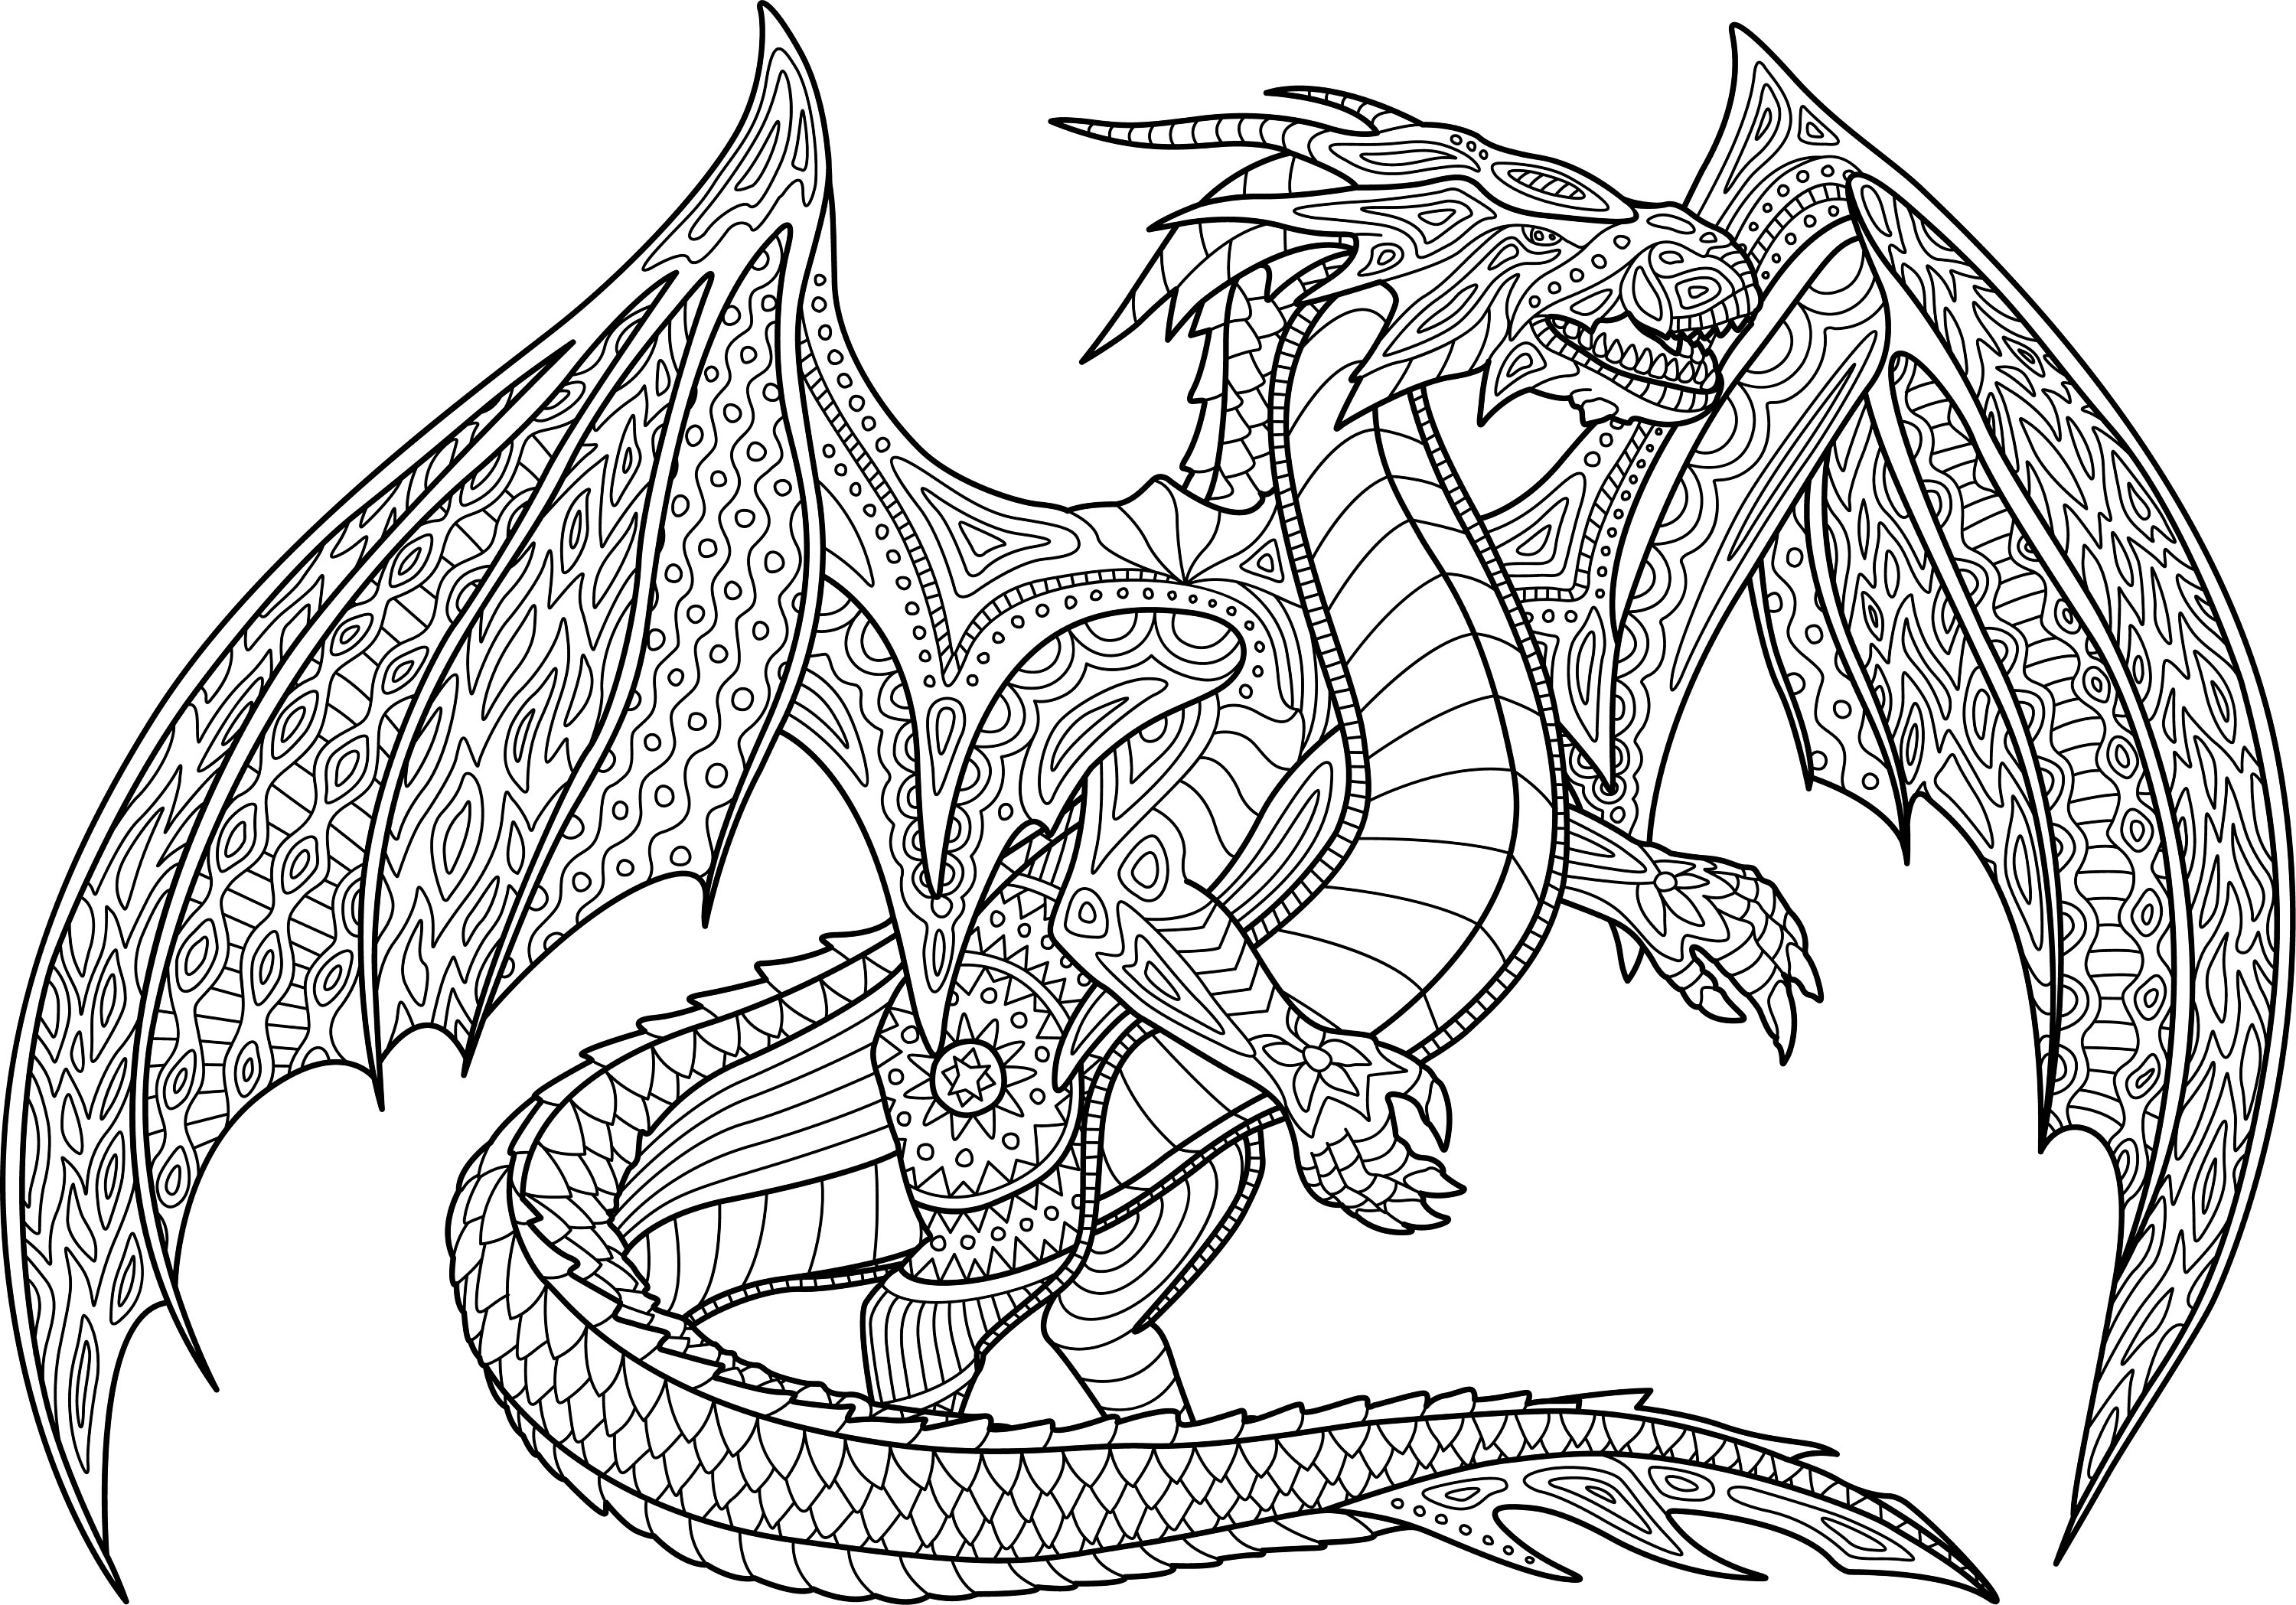 Dragon digital printable coloring page medium difficulty